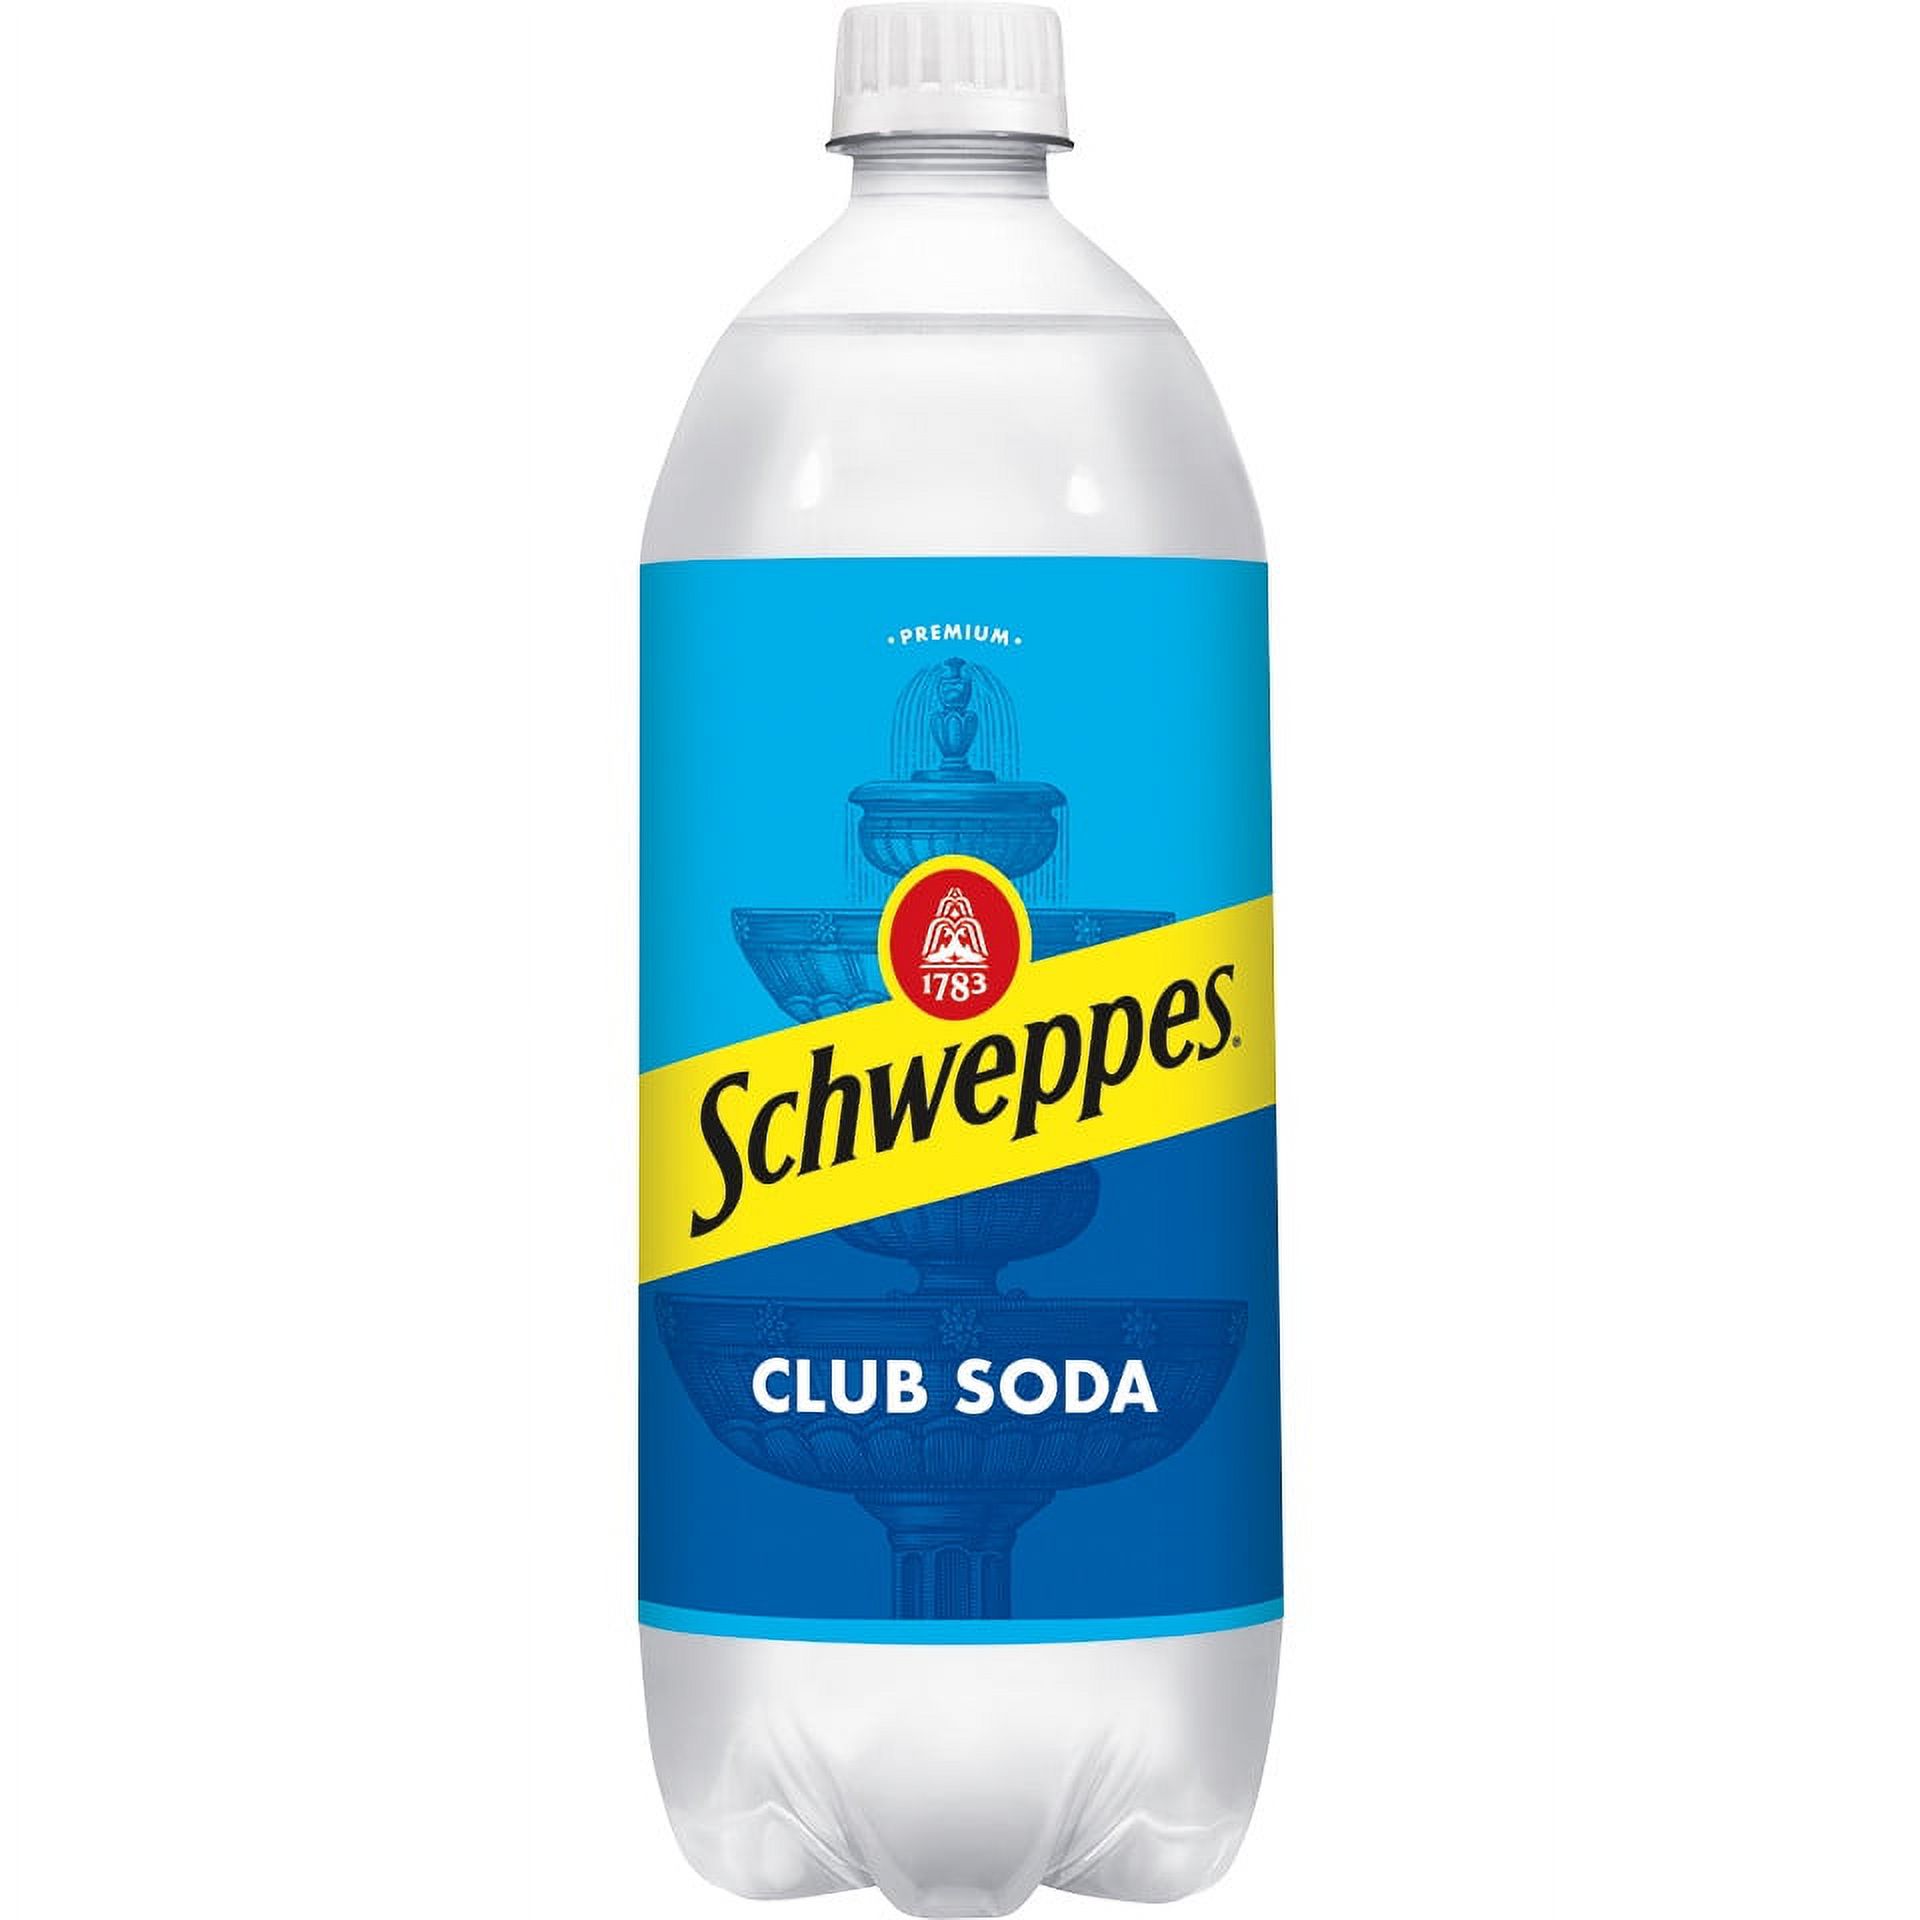 Schweppes Club Soda, 1 L bottle - image 1 of 2